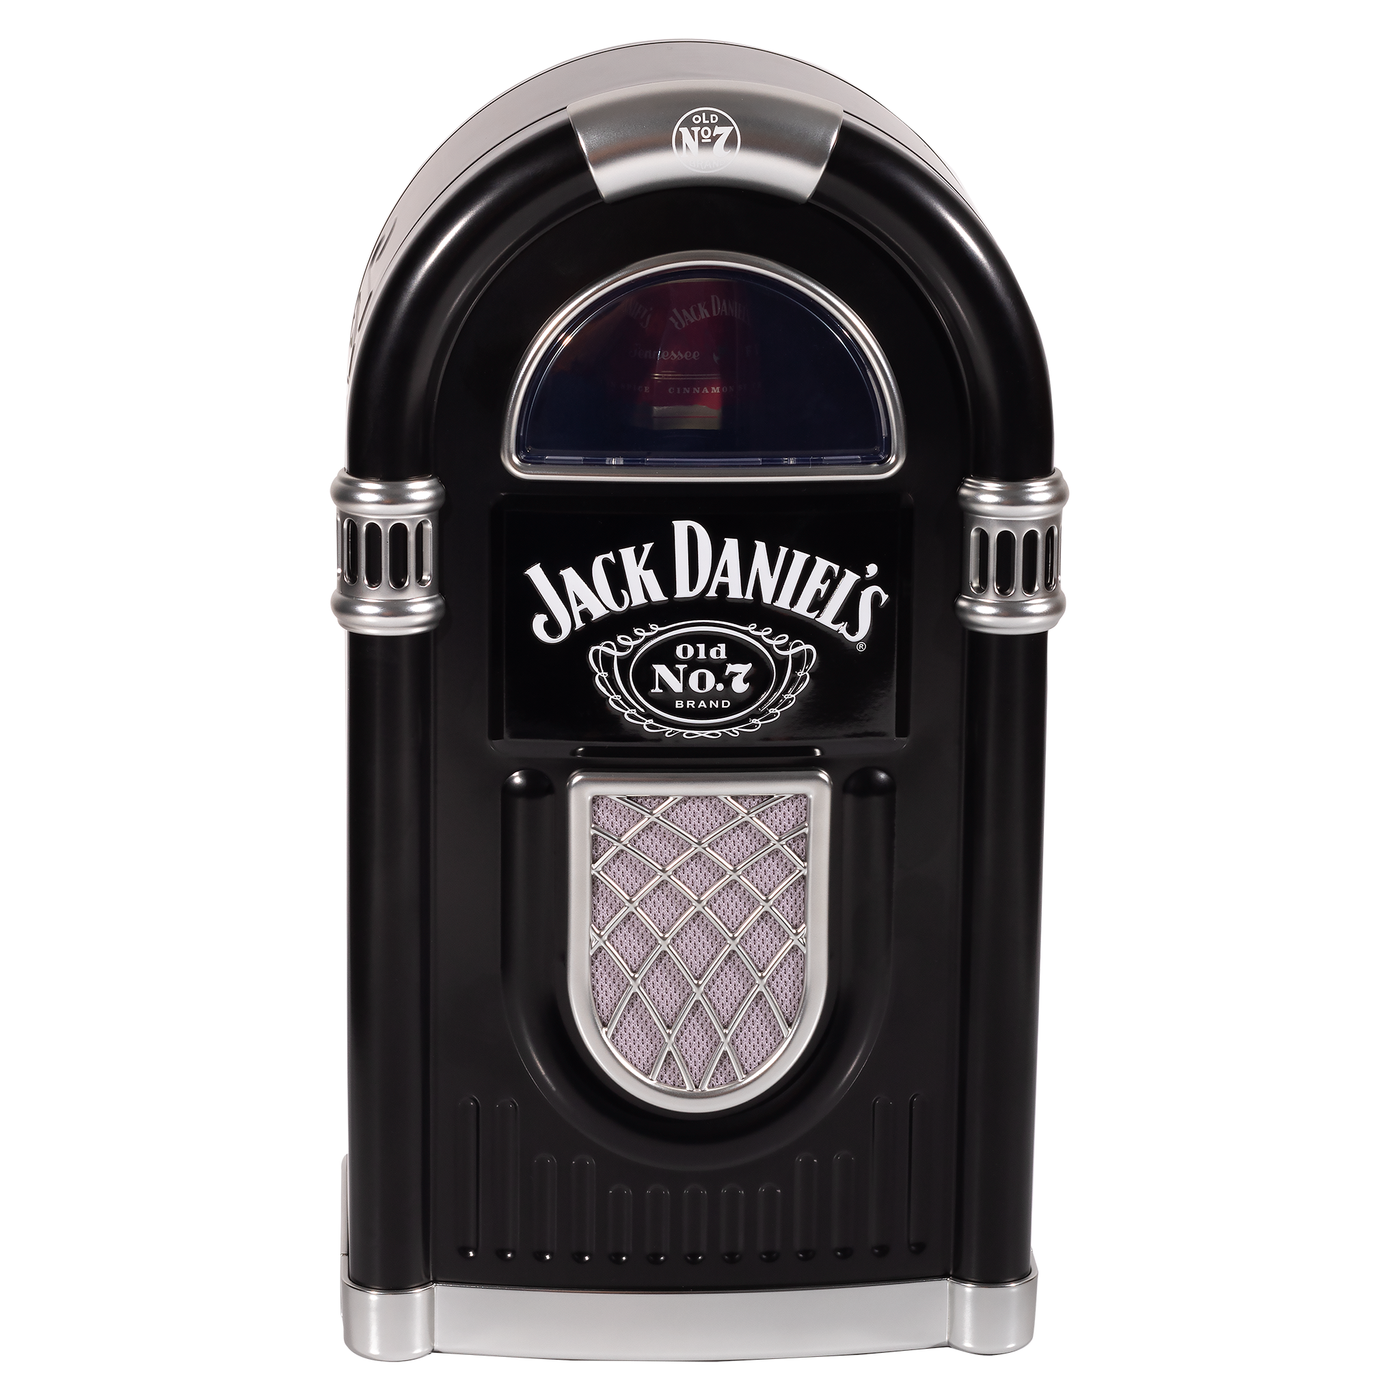 [BUY] Jack Daniel's | Old No. 7 Cinnamon Spice Jukebox | Tennessee Fire ...